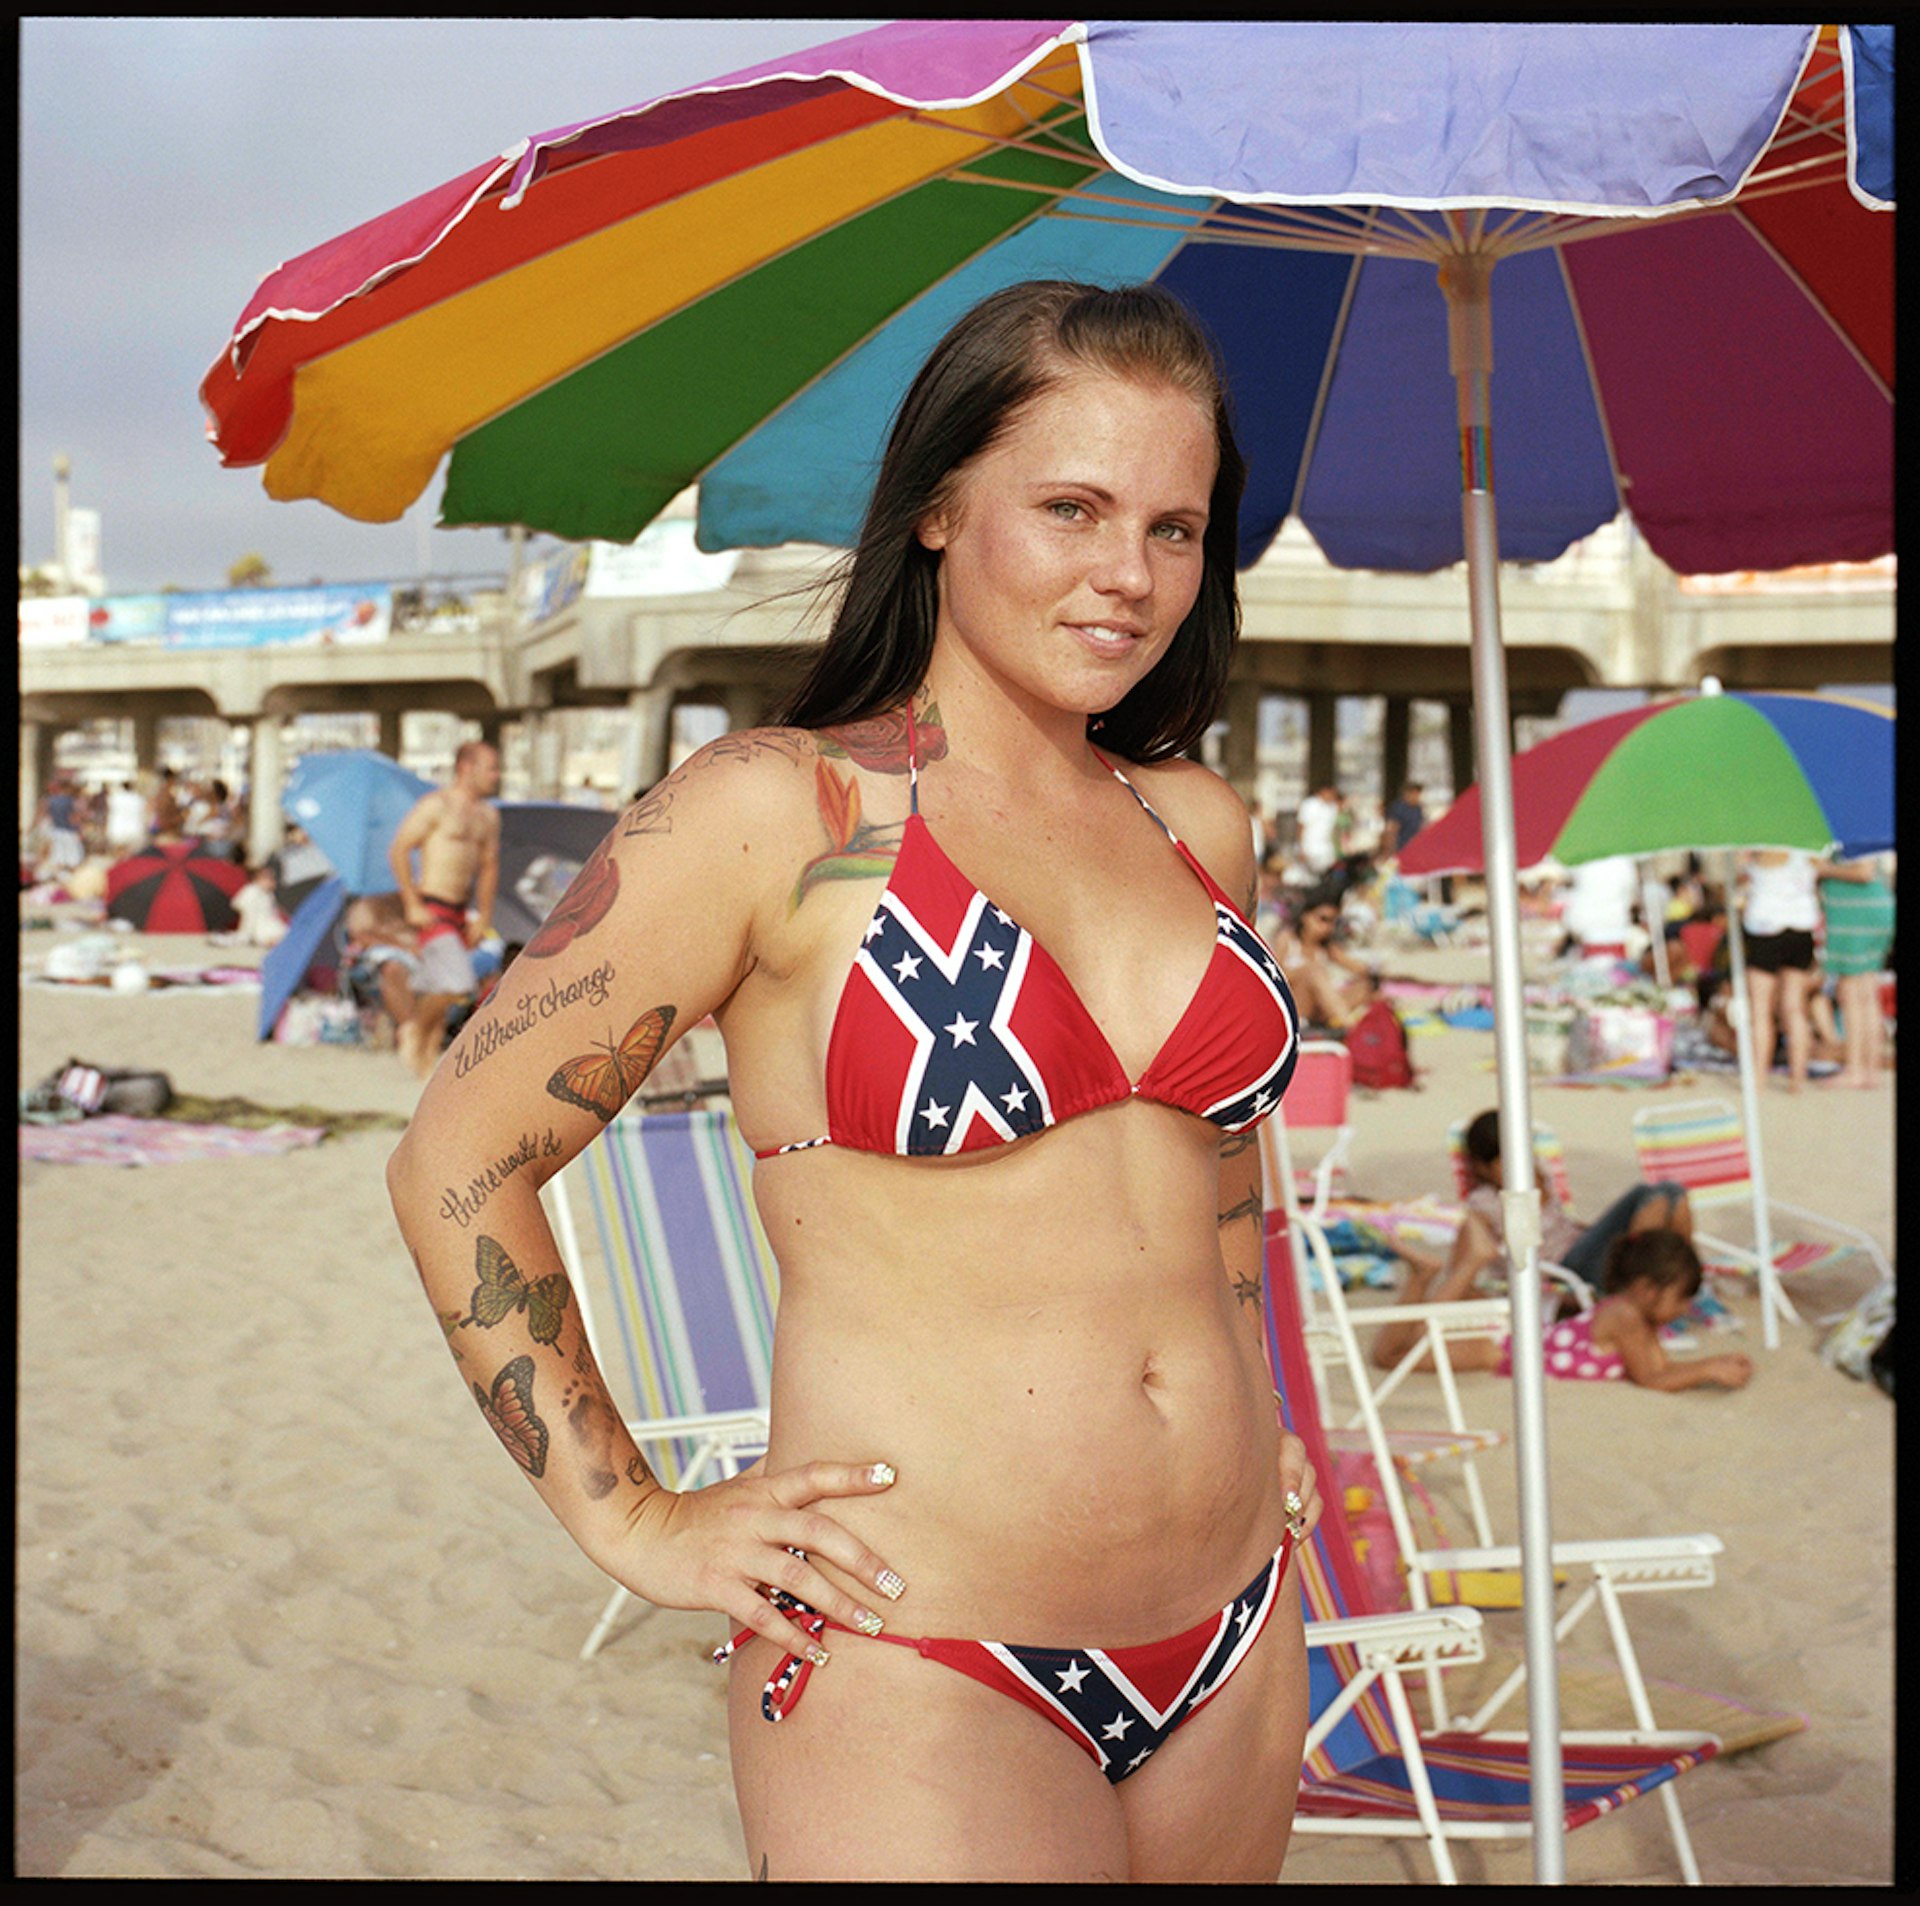 Girl with Confederate flag bikini copy